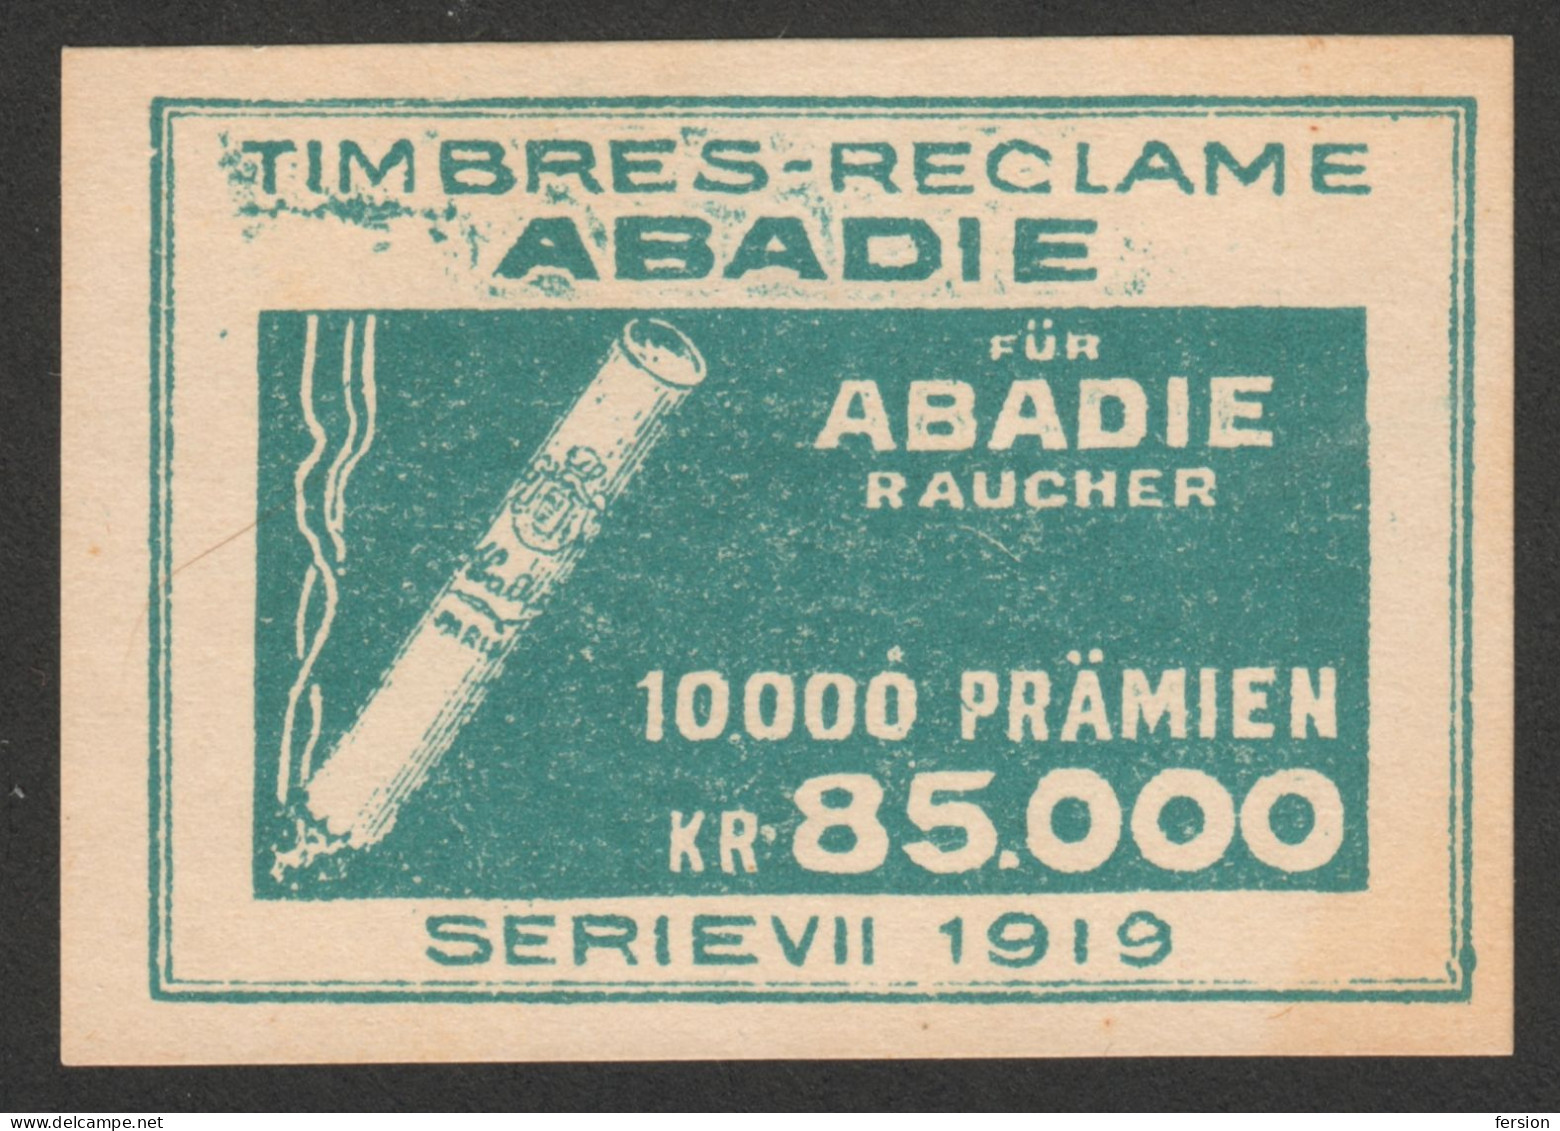 Abadie Reklamemarke GERMANY Austria 1919 Lottery - Tobacco Cigarettes Cigarette Advertising Label Vignette Cinderella - Tabaco